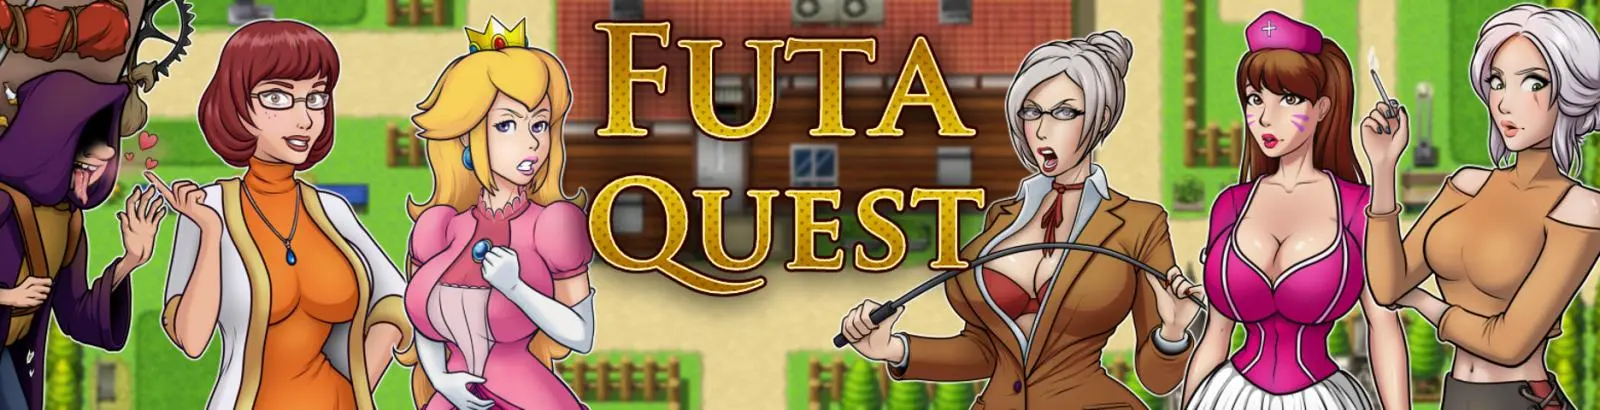 Futa Quest [v0.55] main image